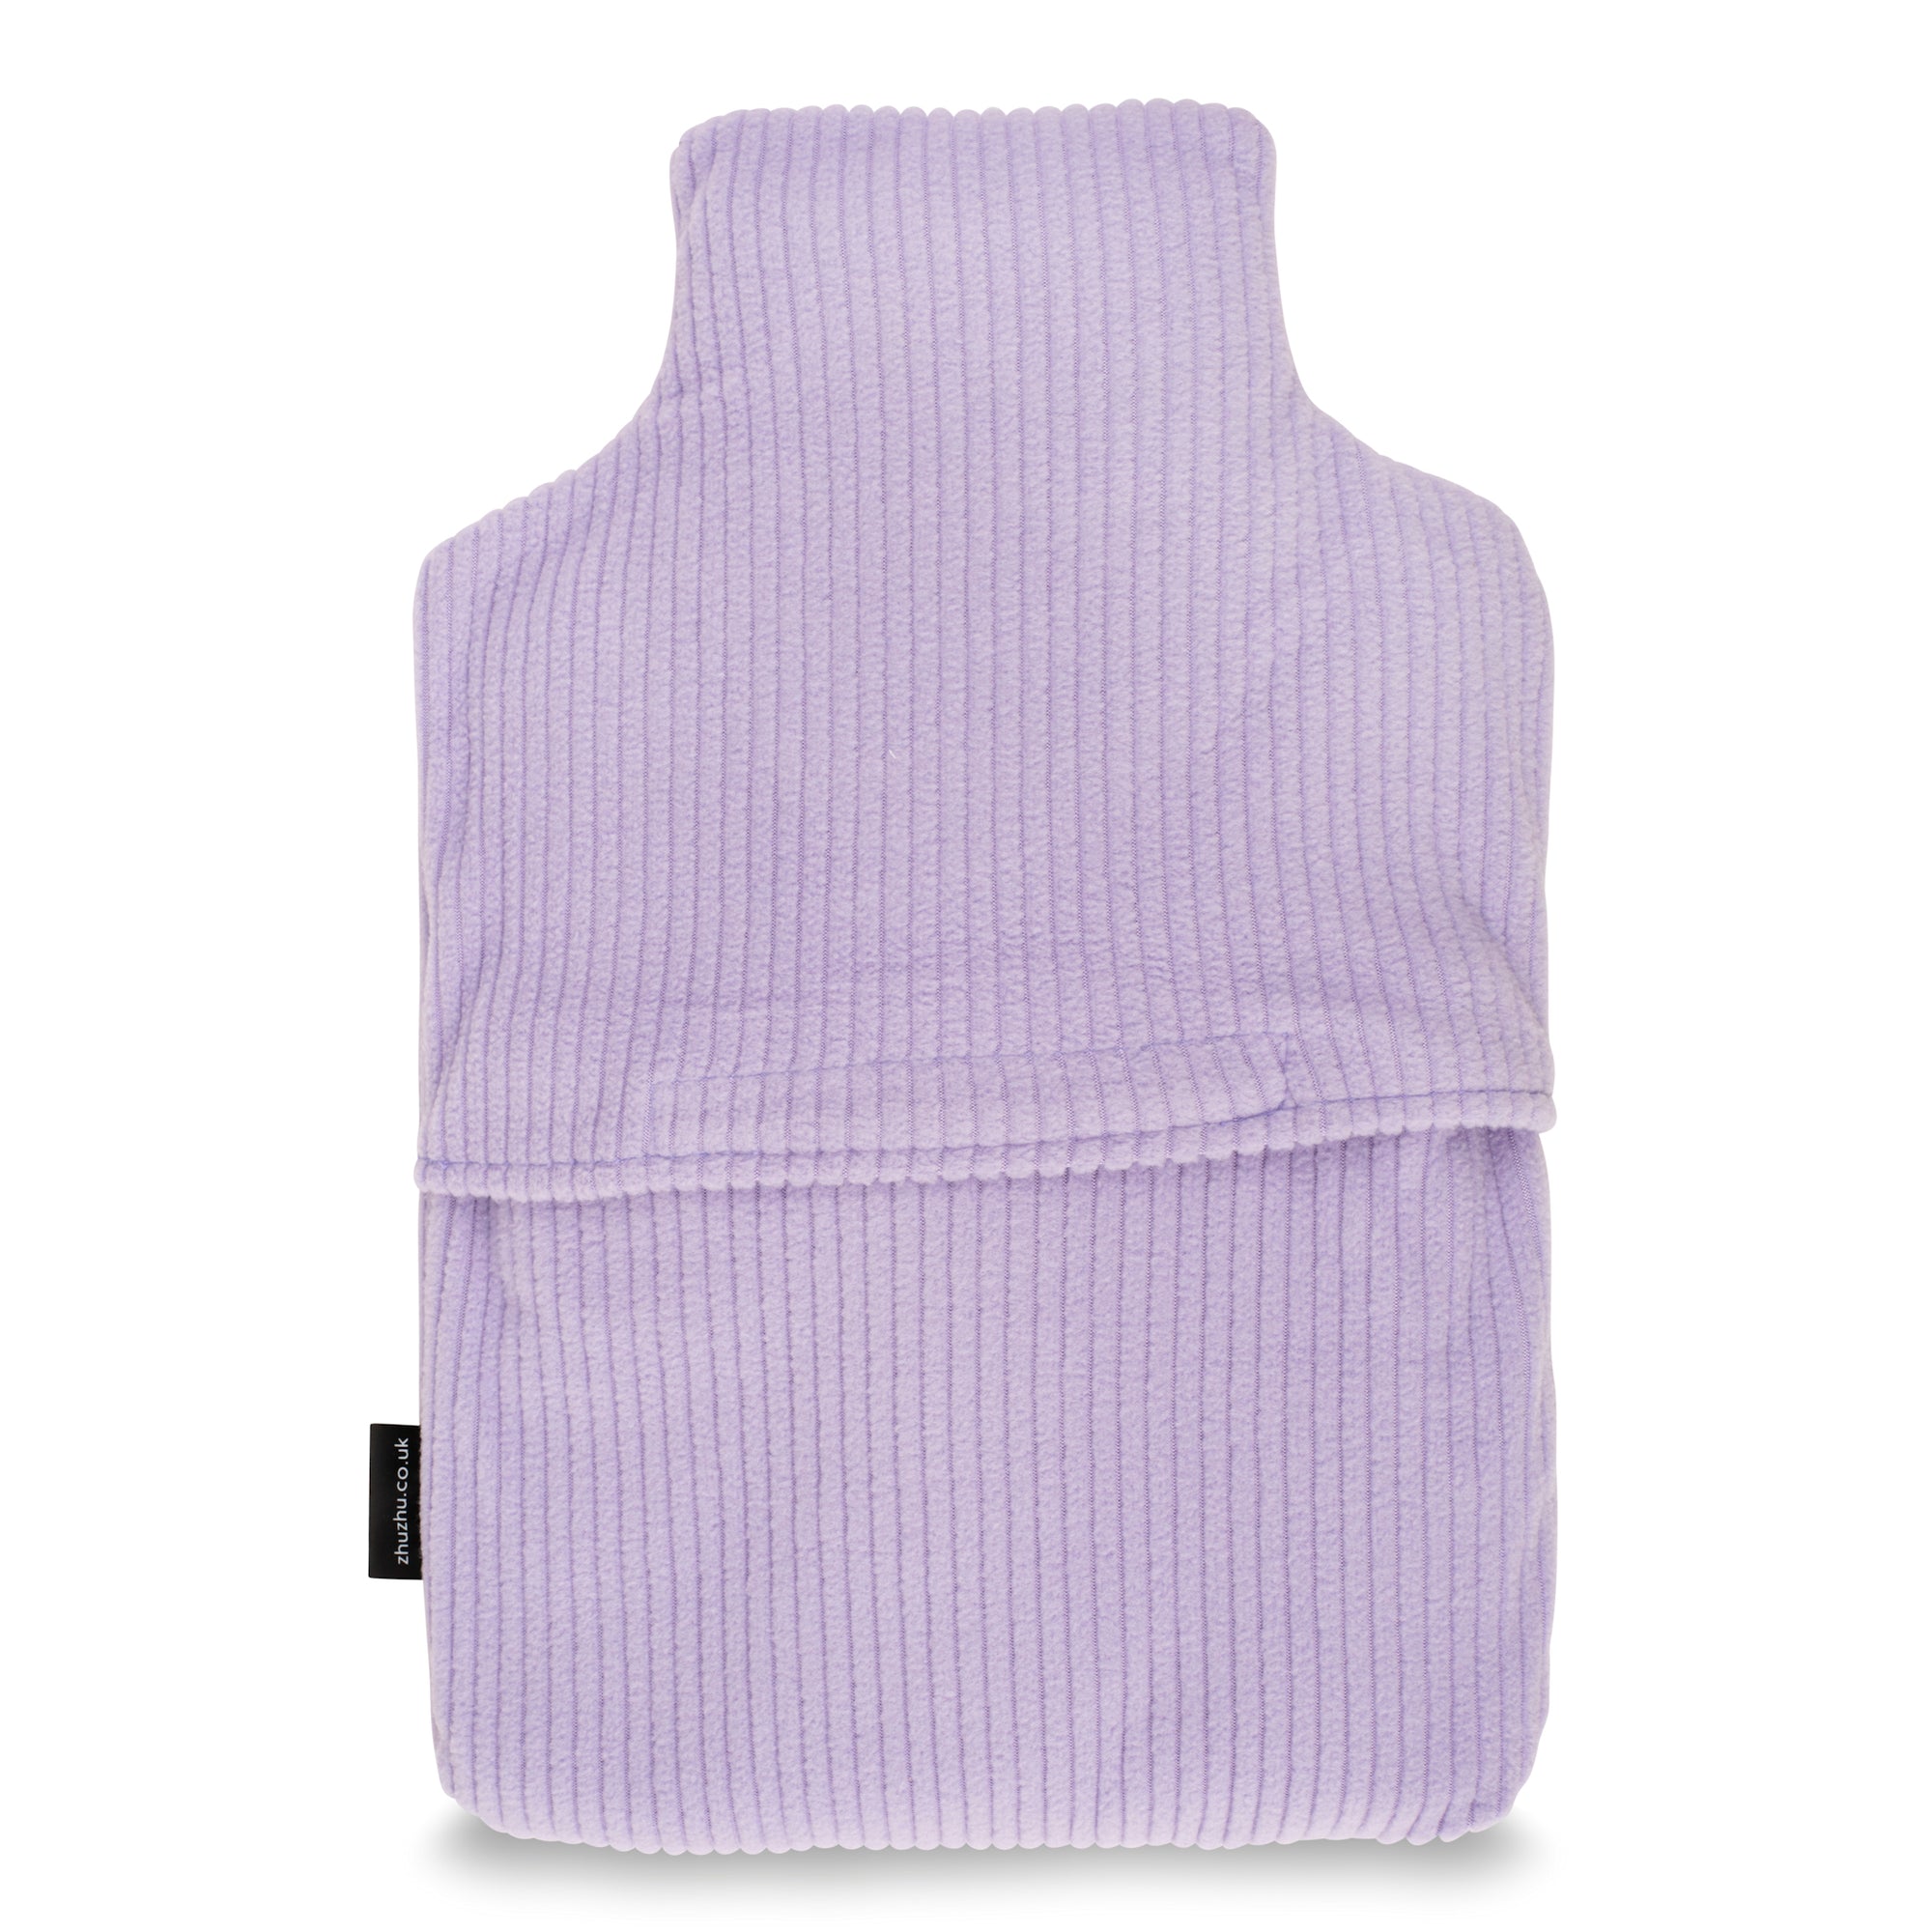 Zhu-Zhu Hot Bottle Body Warmer Microwavable Wheat Bag - Lilac Fleece